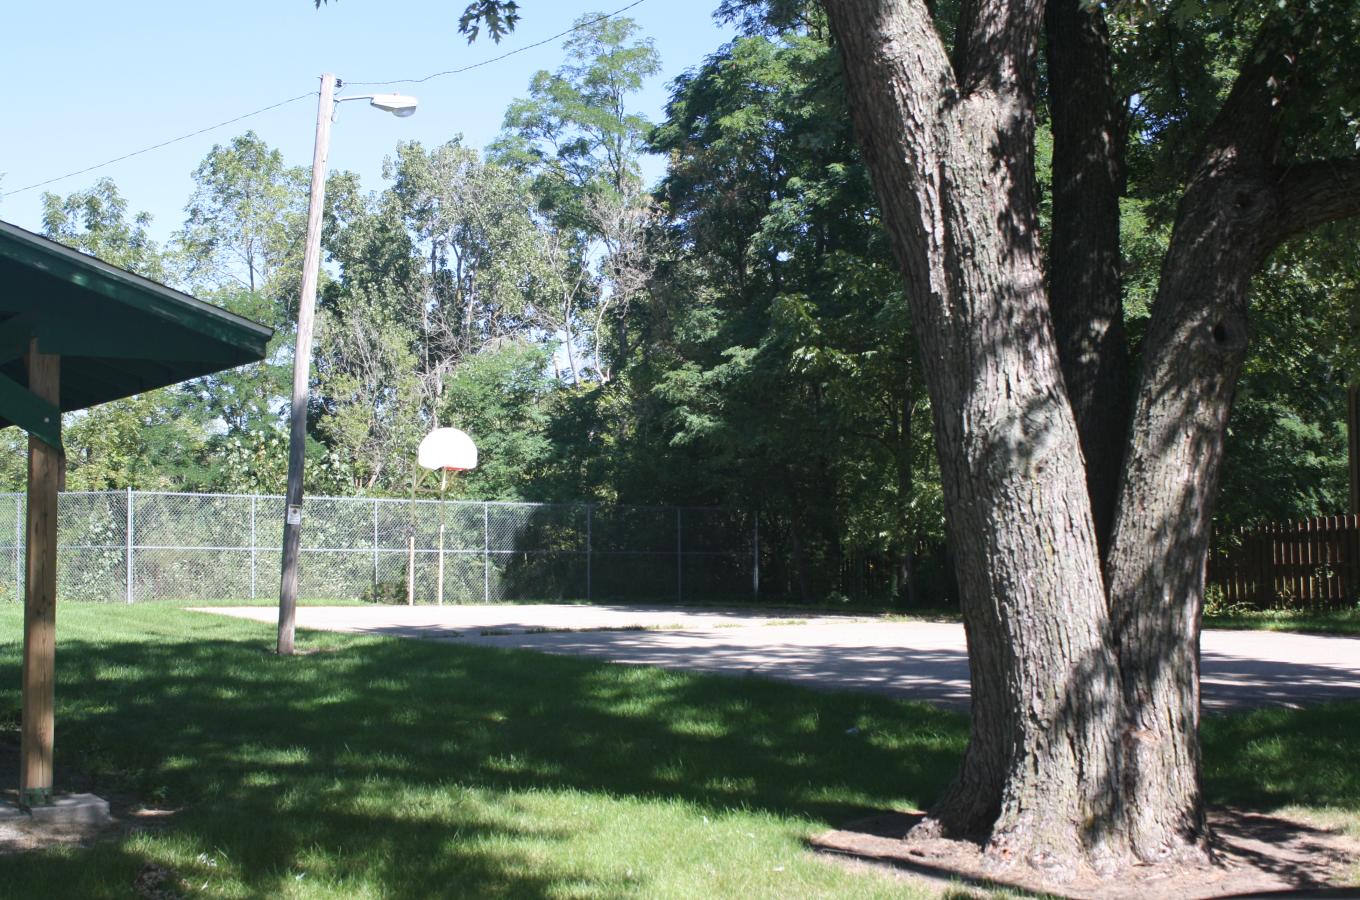 Carol Beach Park basketball court V Pic